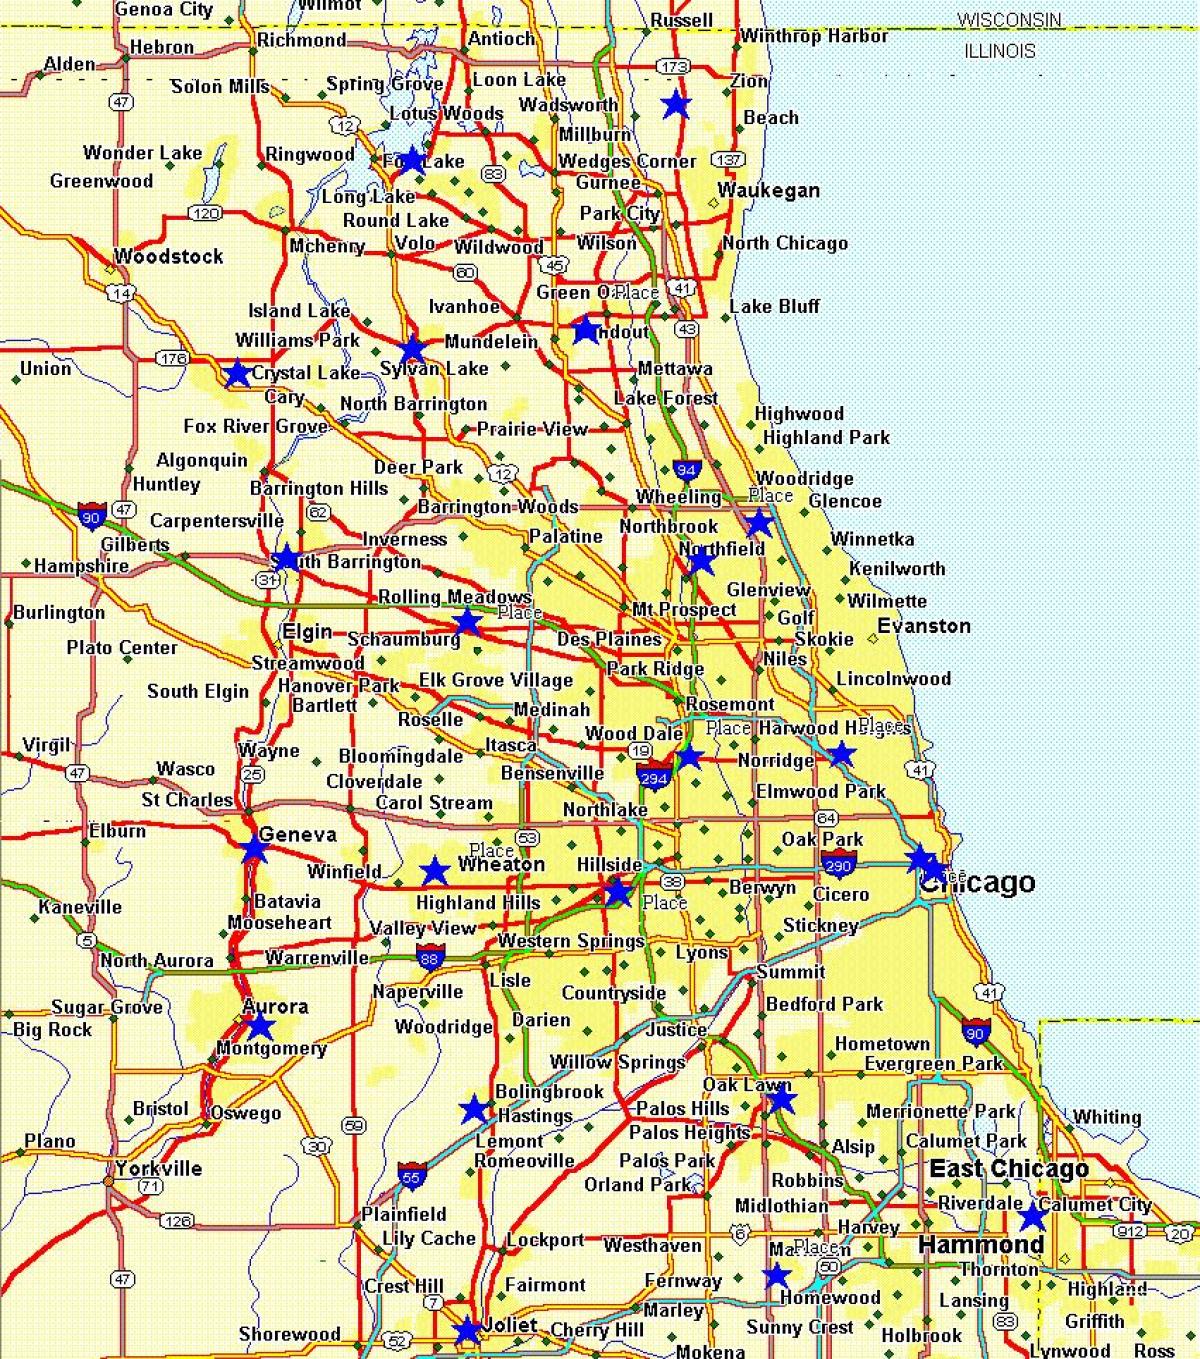 мапа града Чикага